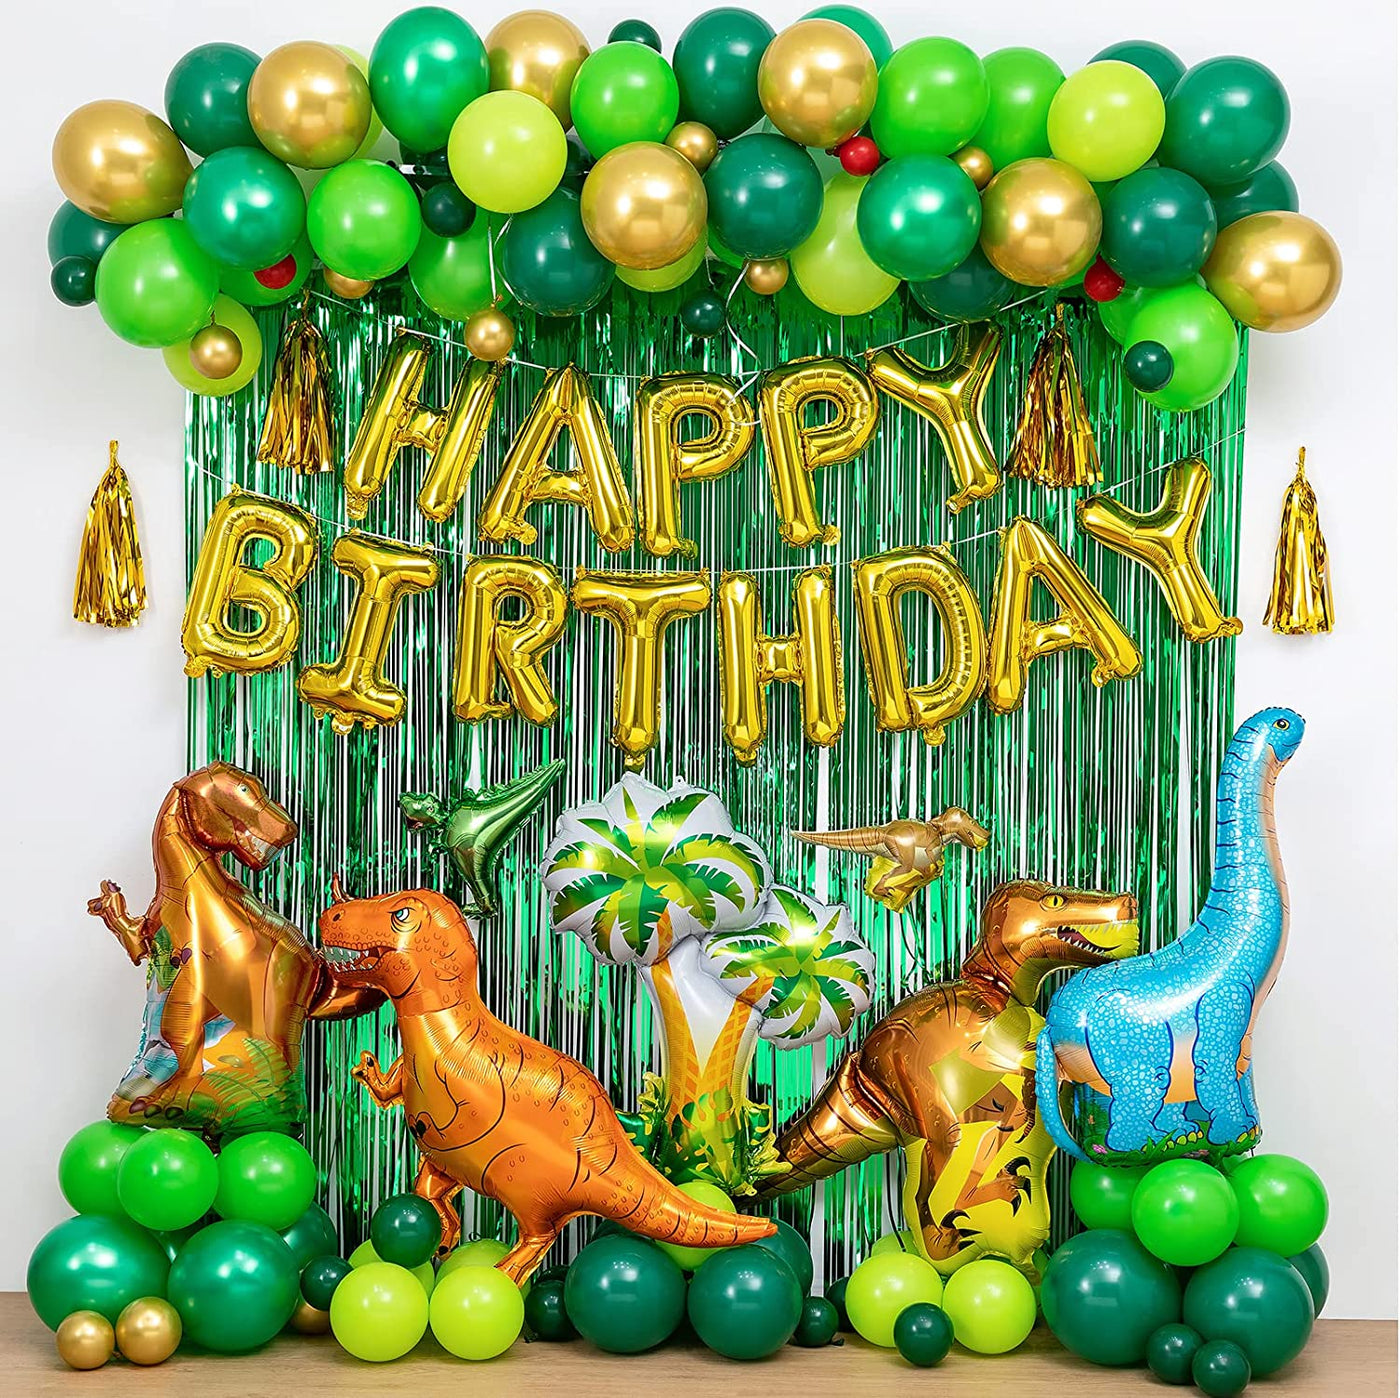 Dinosaur Birthday Party Decorations